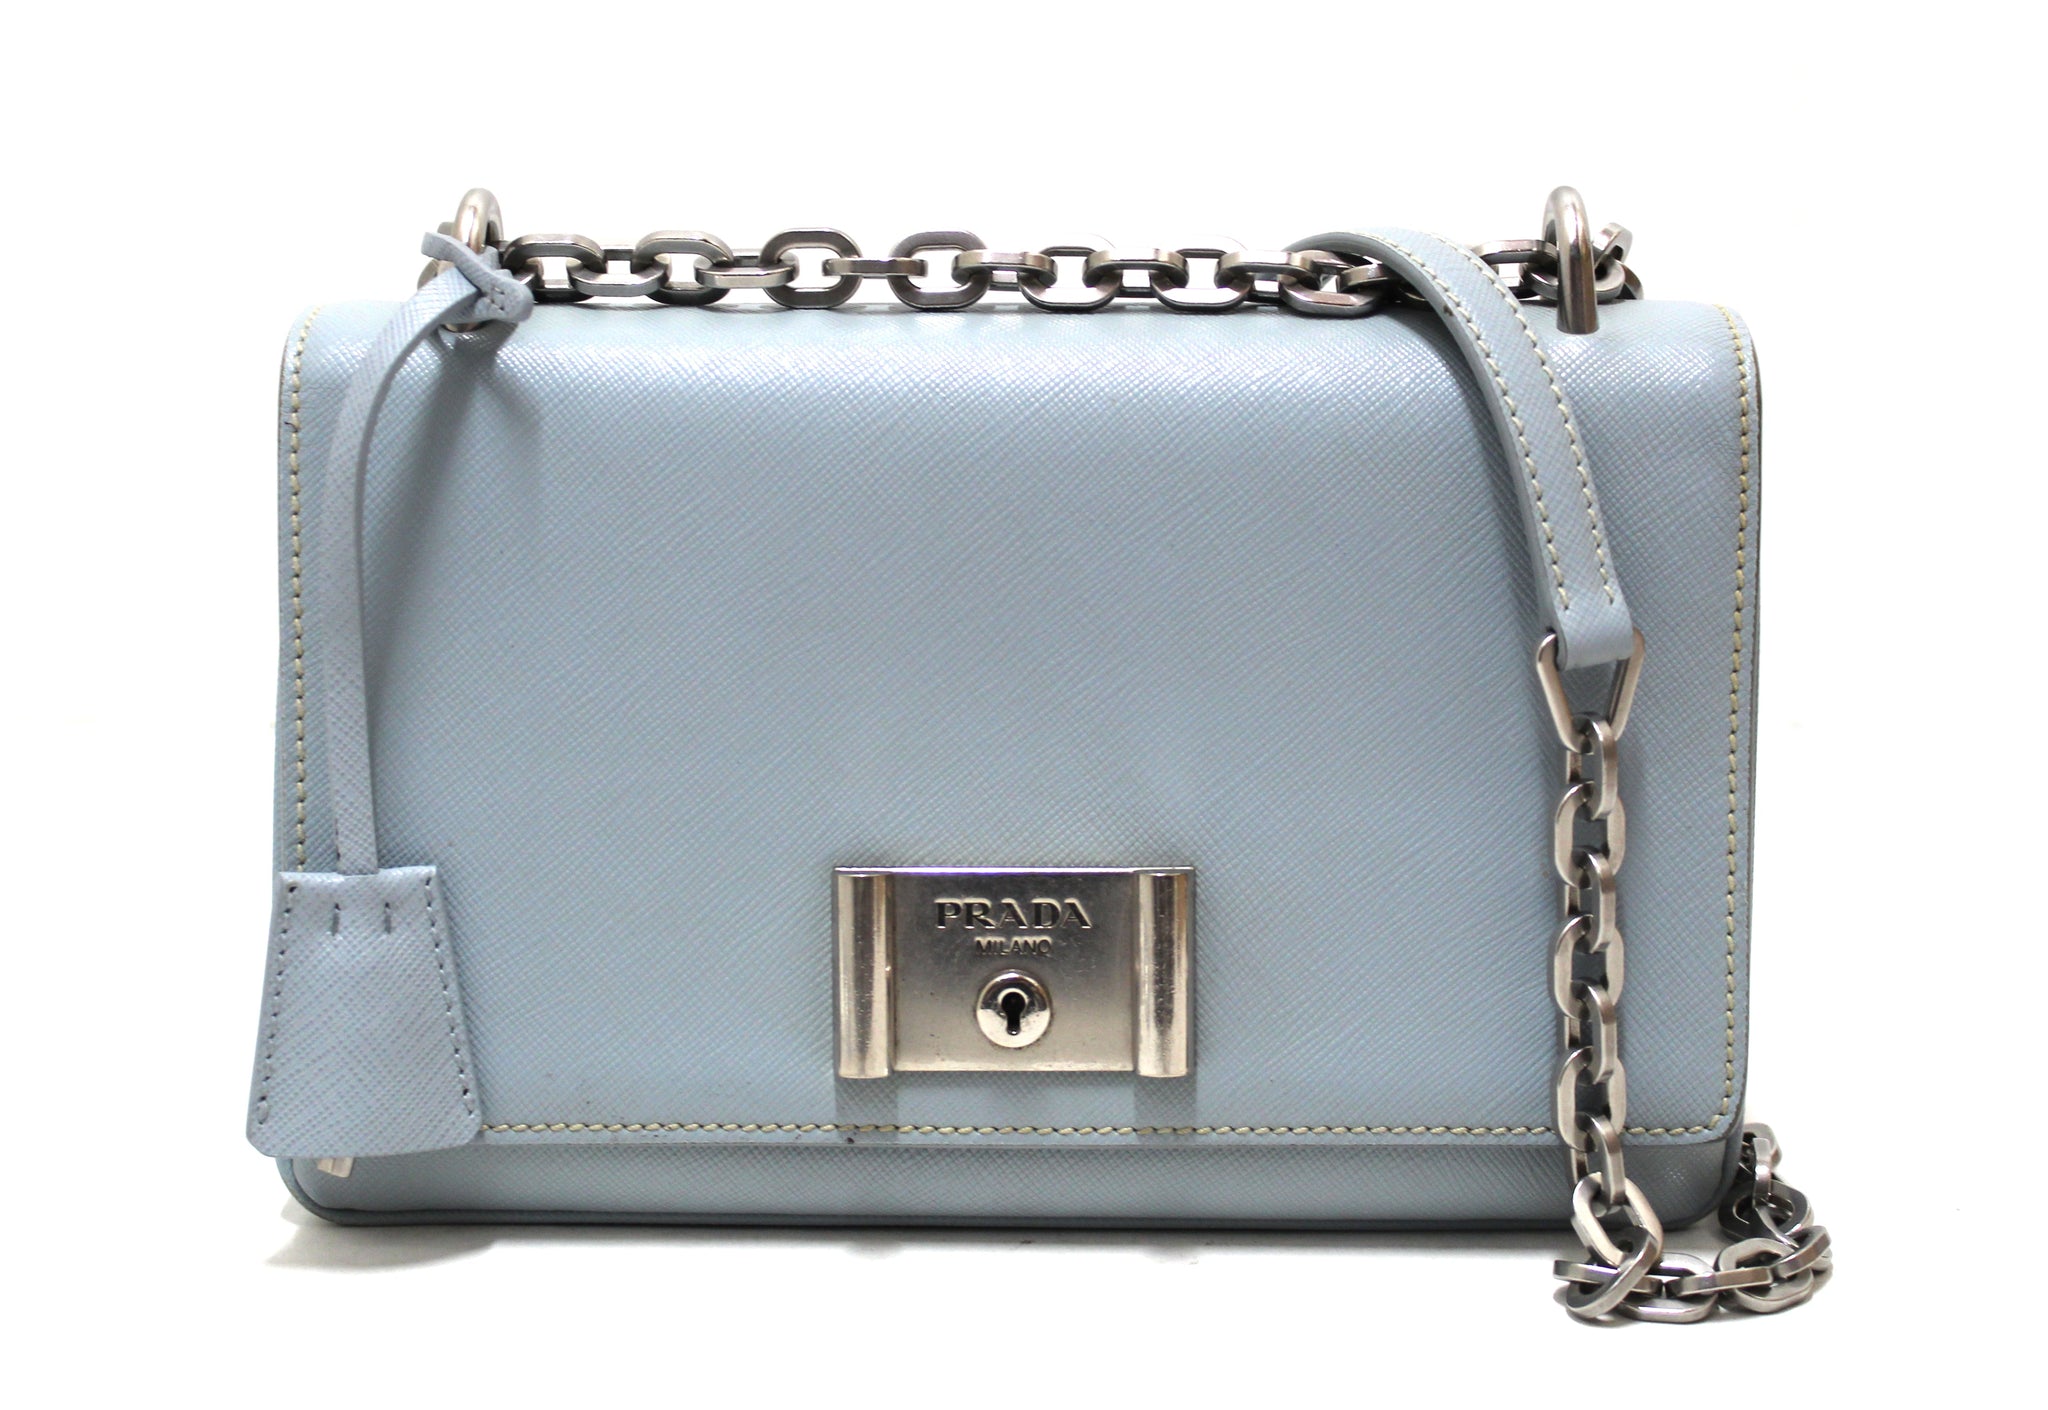 Prada Powder Blue Saffiano Leather Mini Bag With Chain Crossbody Bag